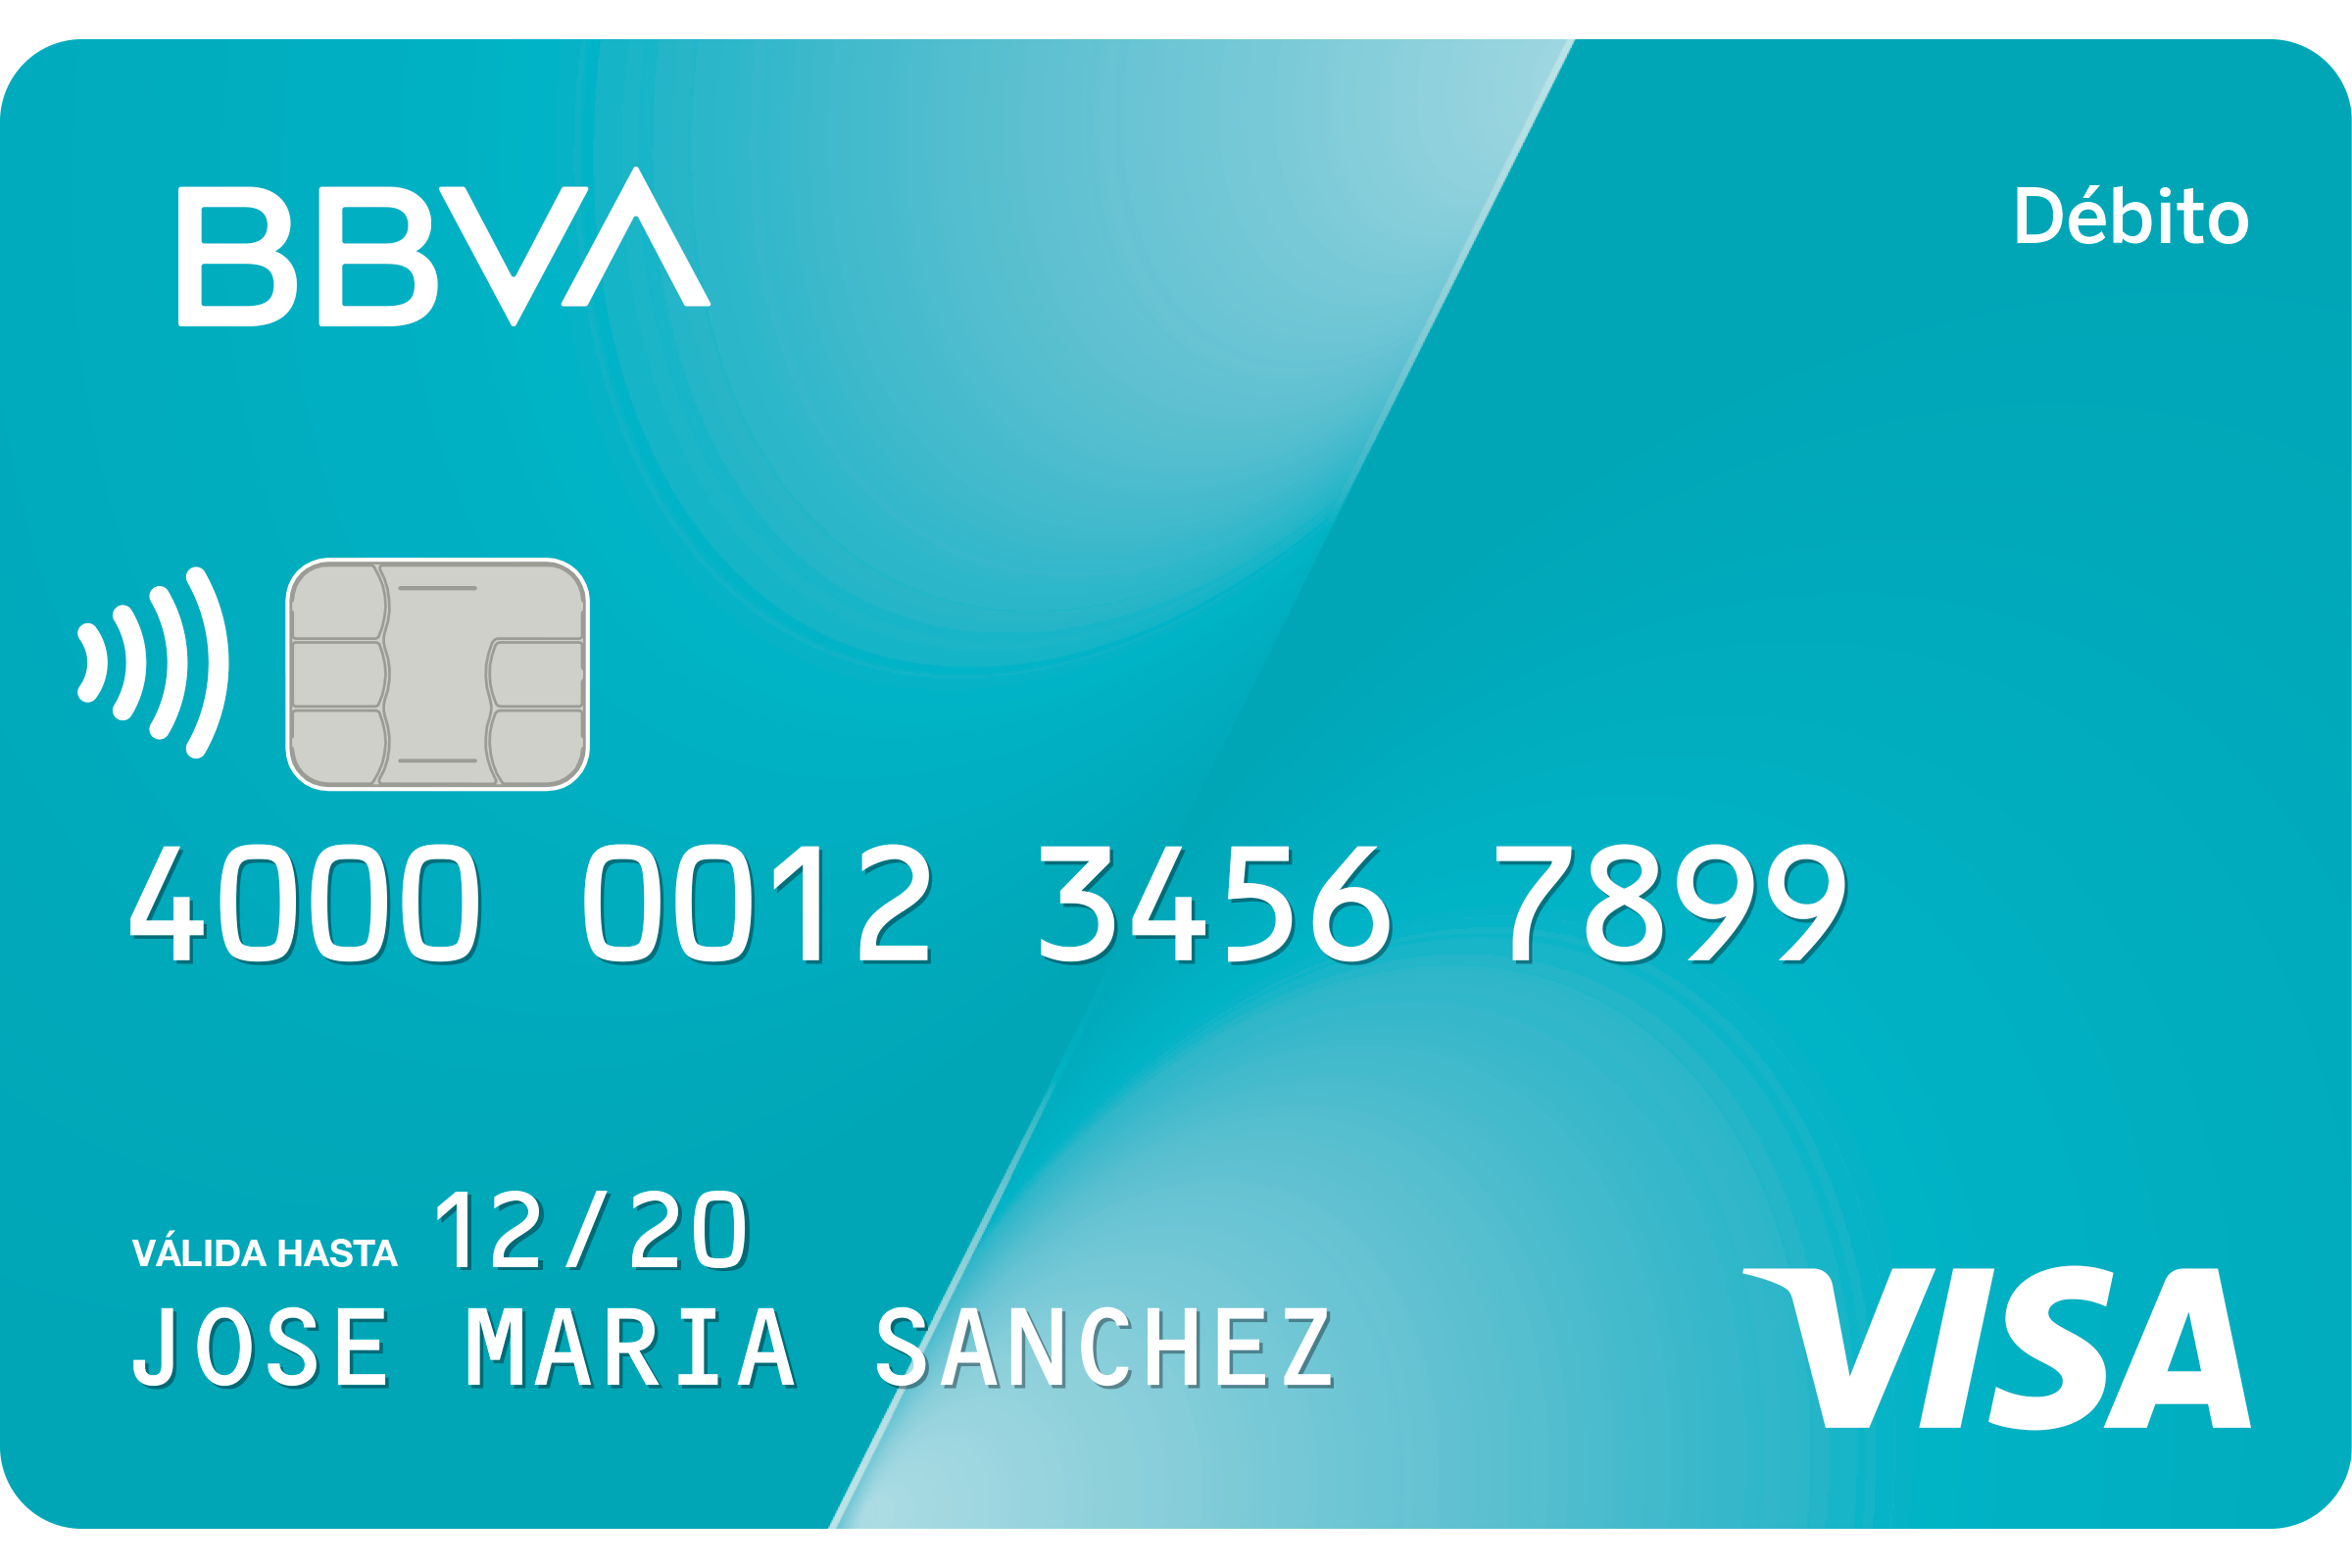 ¿Cómo renovar tarjeta de débito BBVA?